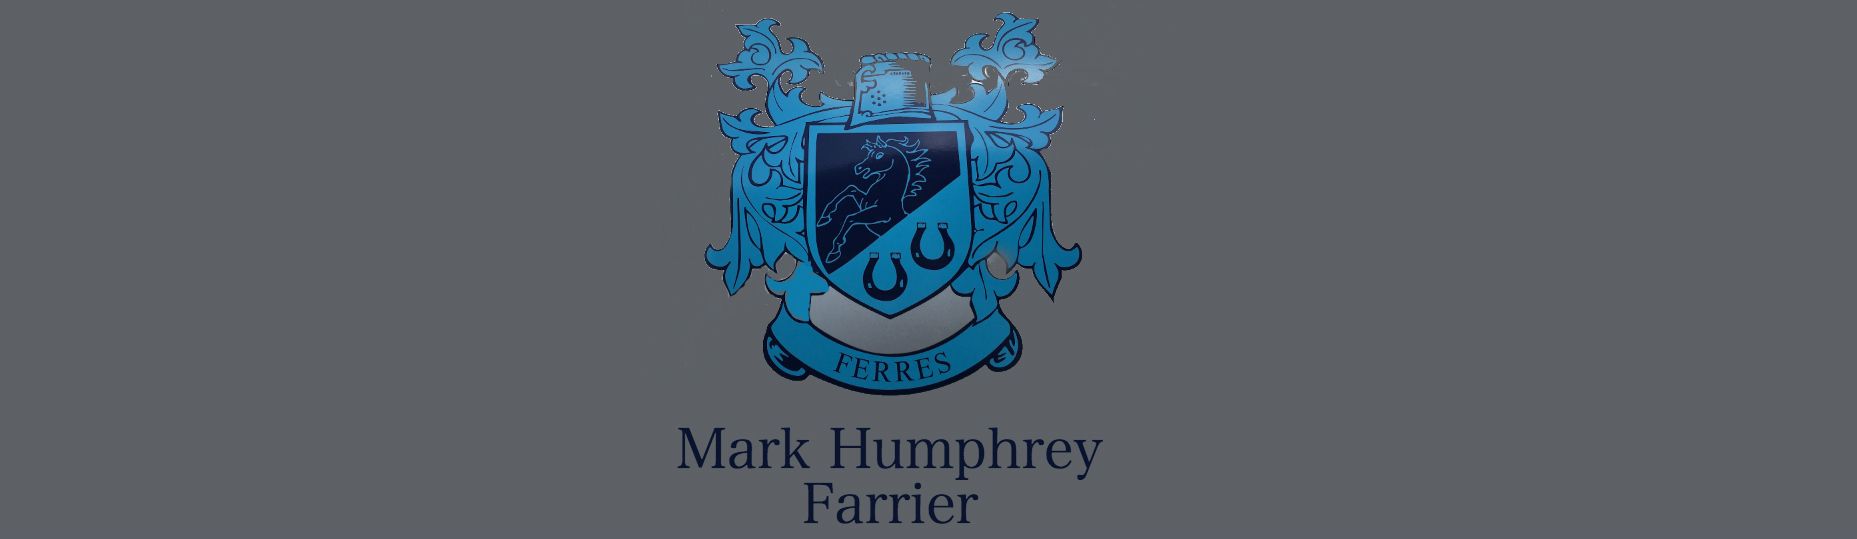 mark humphrey's logo